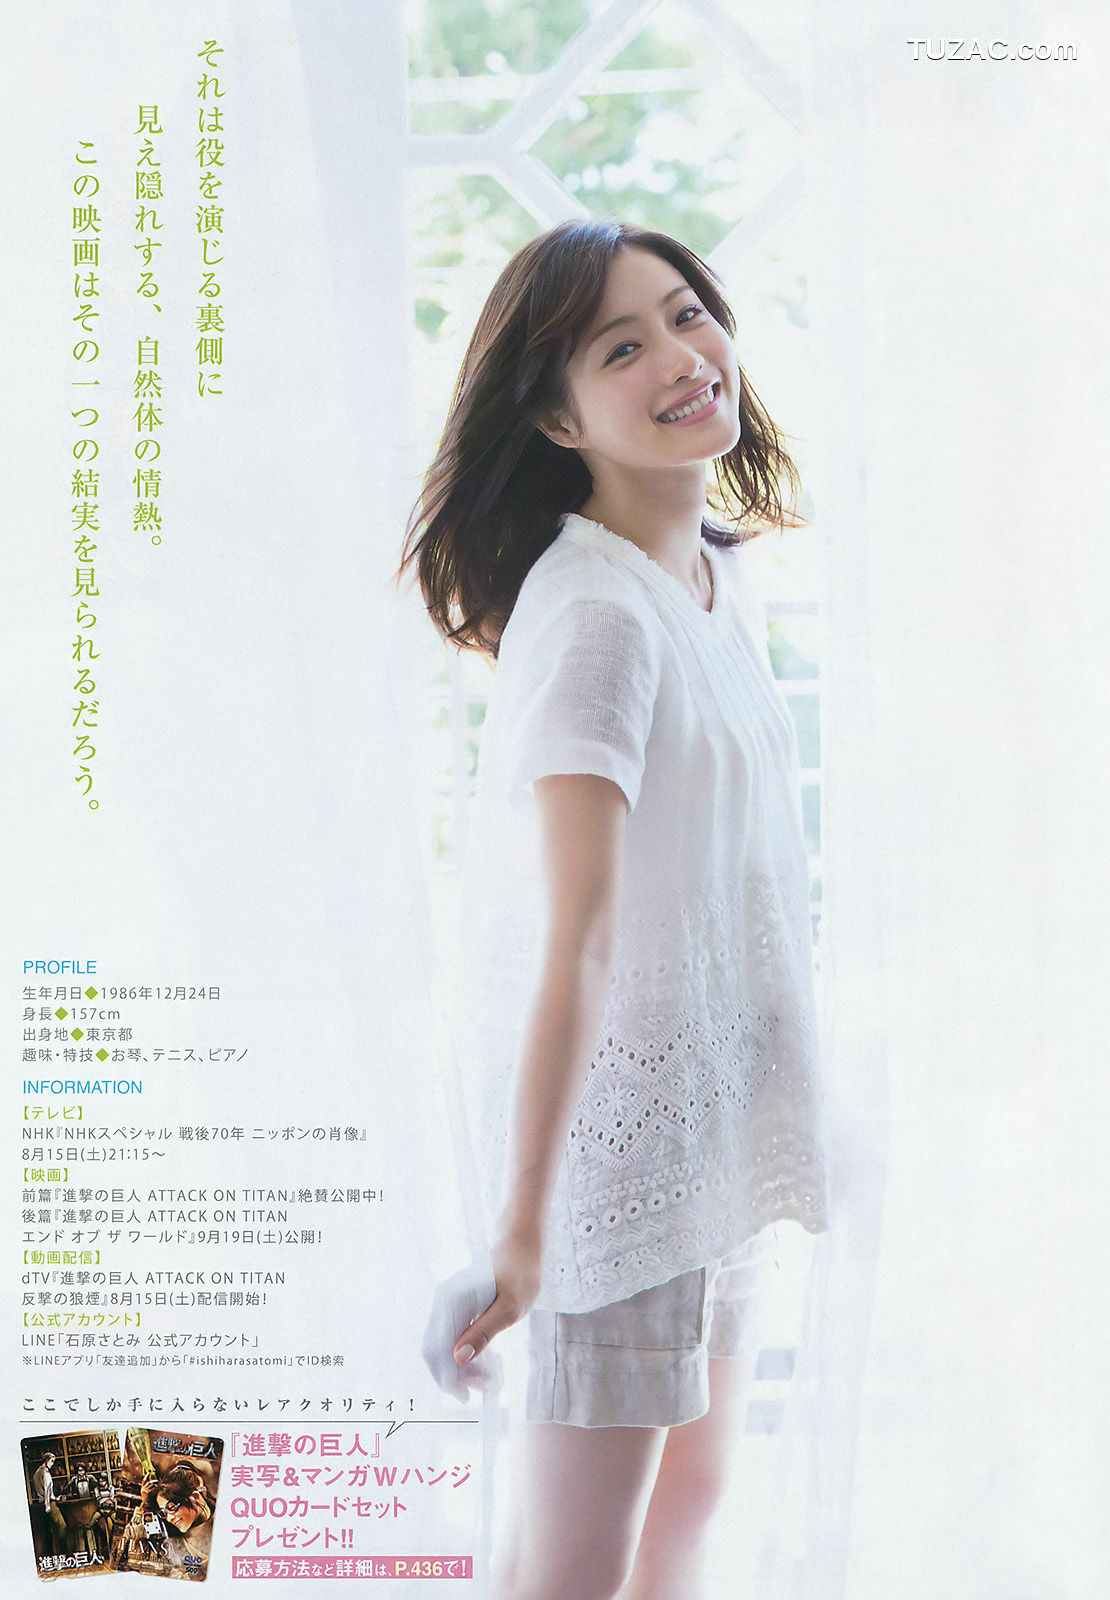 Young Magazine杂志写真_ 石原さとみ 高崎聖子 2015年No.37-38 写真杂志[10P]